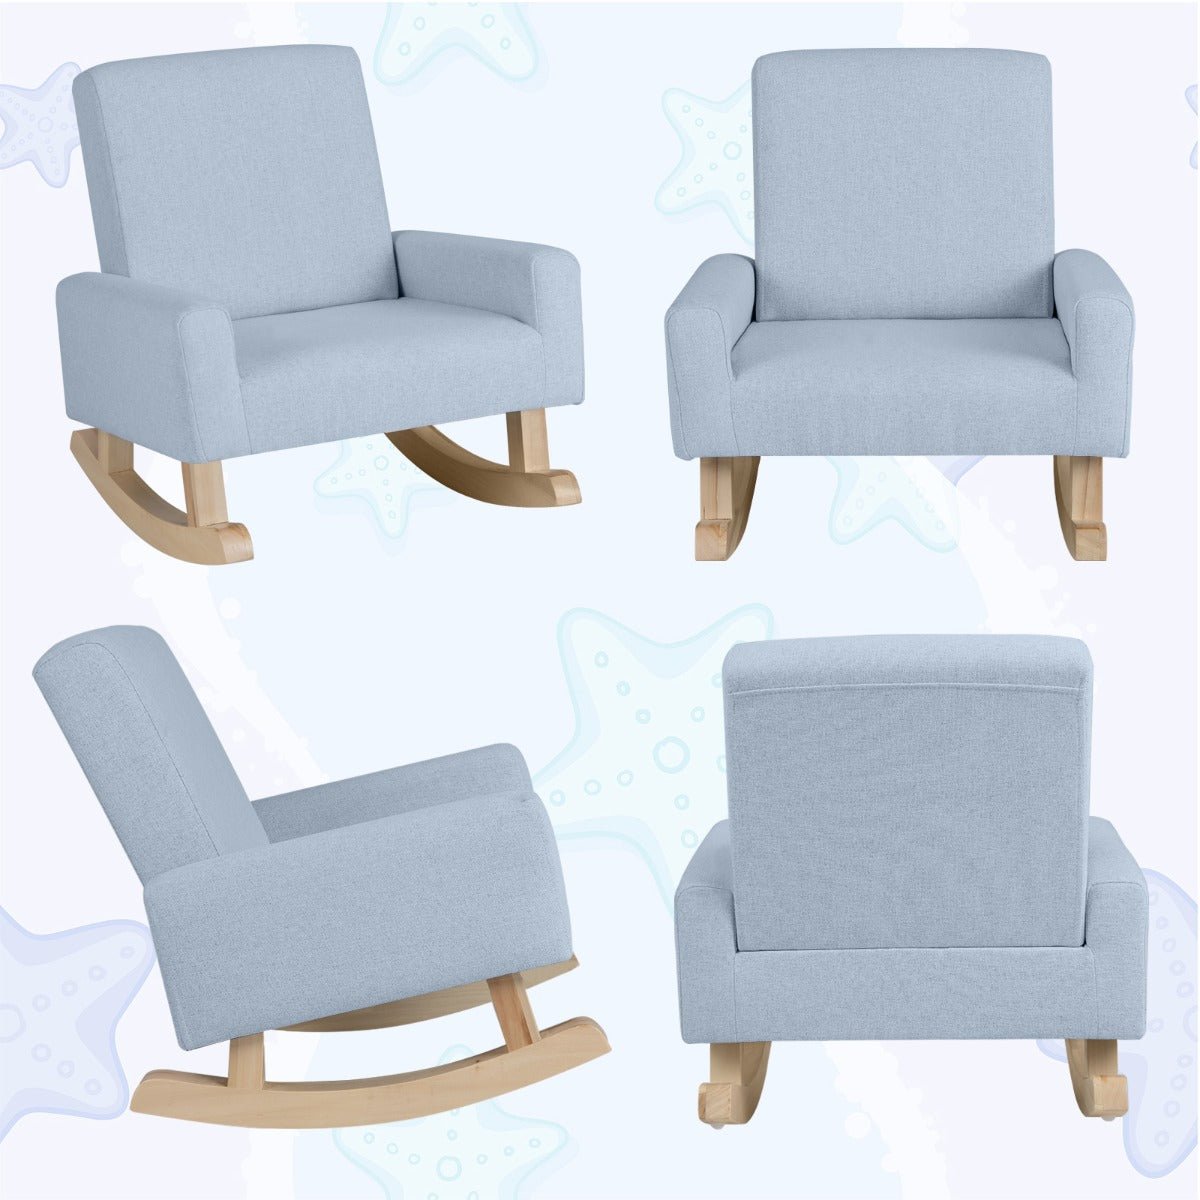 Kid-Friendly Rocking Chair - Blue, Wood Legs, Anti-tipping Design for Joy